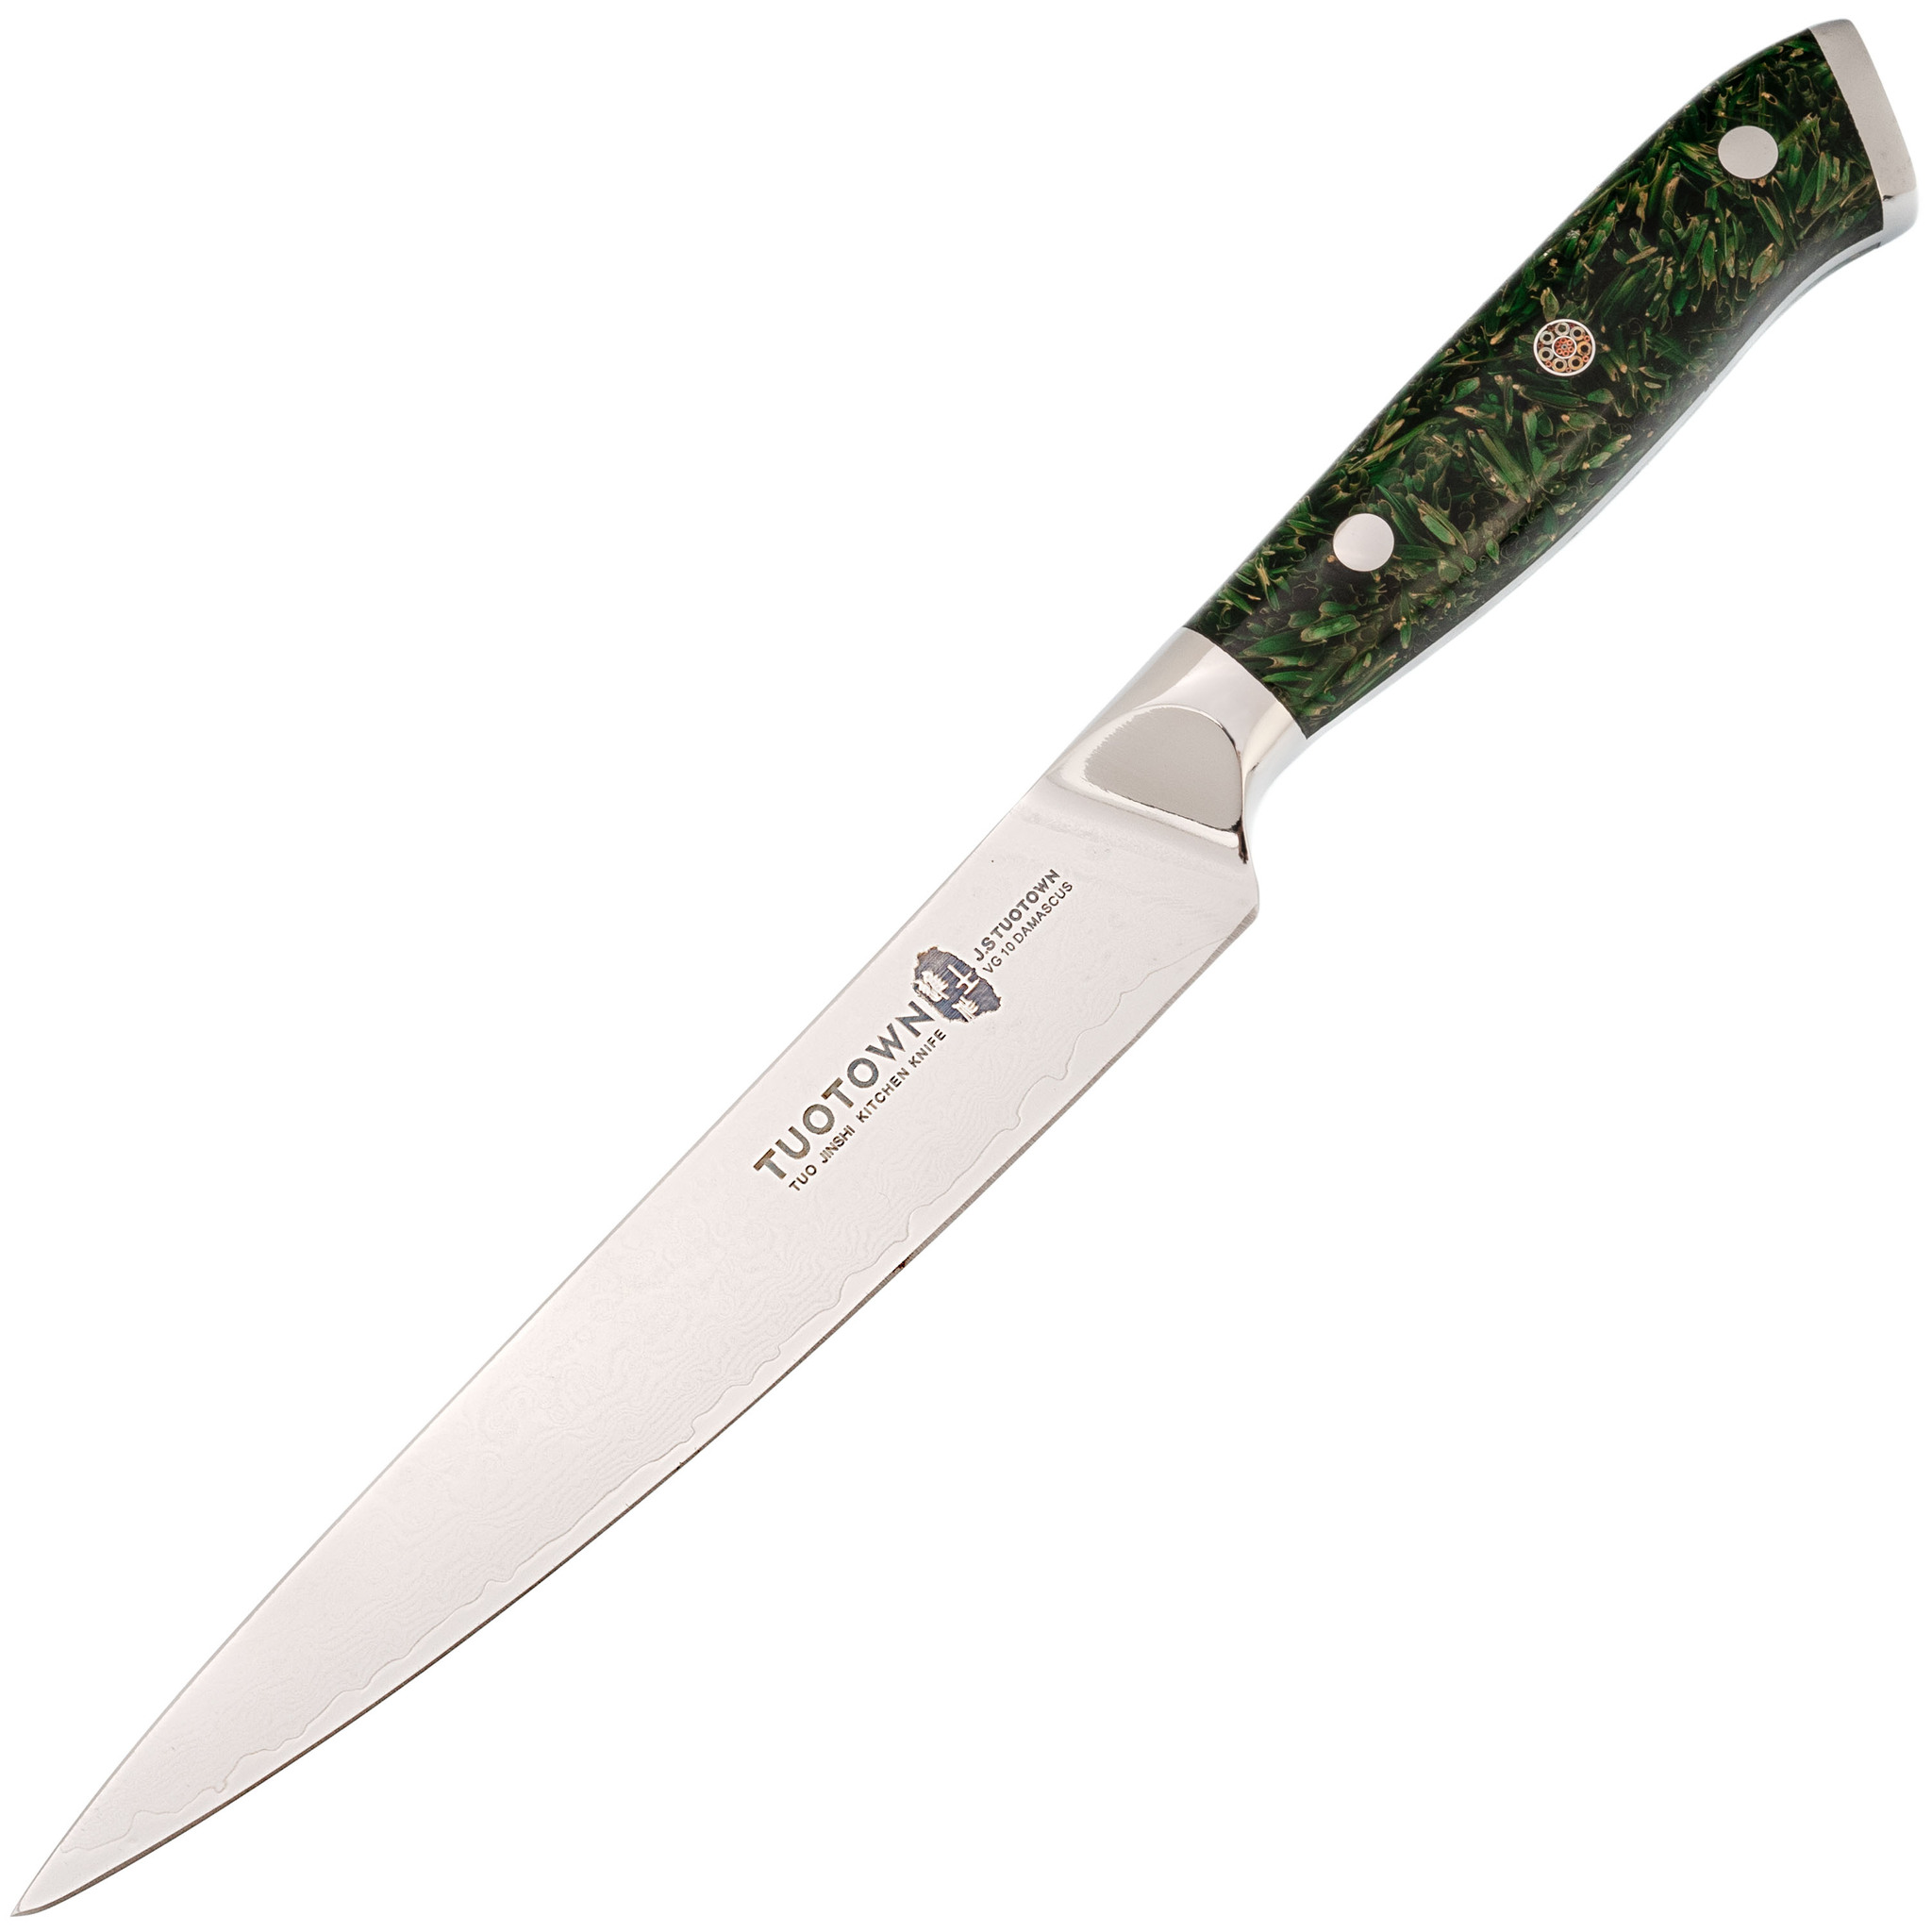 Кухонный нож Tuotown, сталь VG10, обкладка Damascus, рукоять акрил, зеленый нож кухонный kioto лезвие 20 см